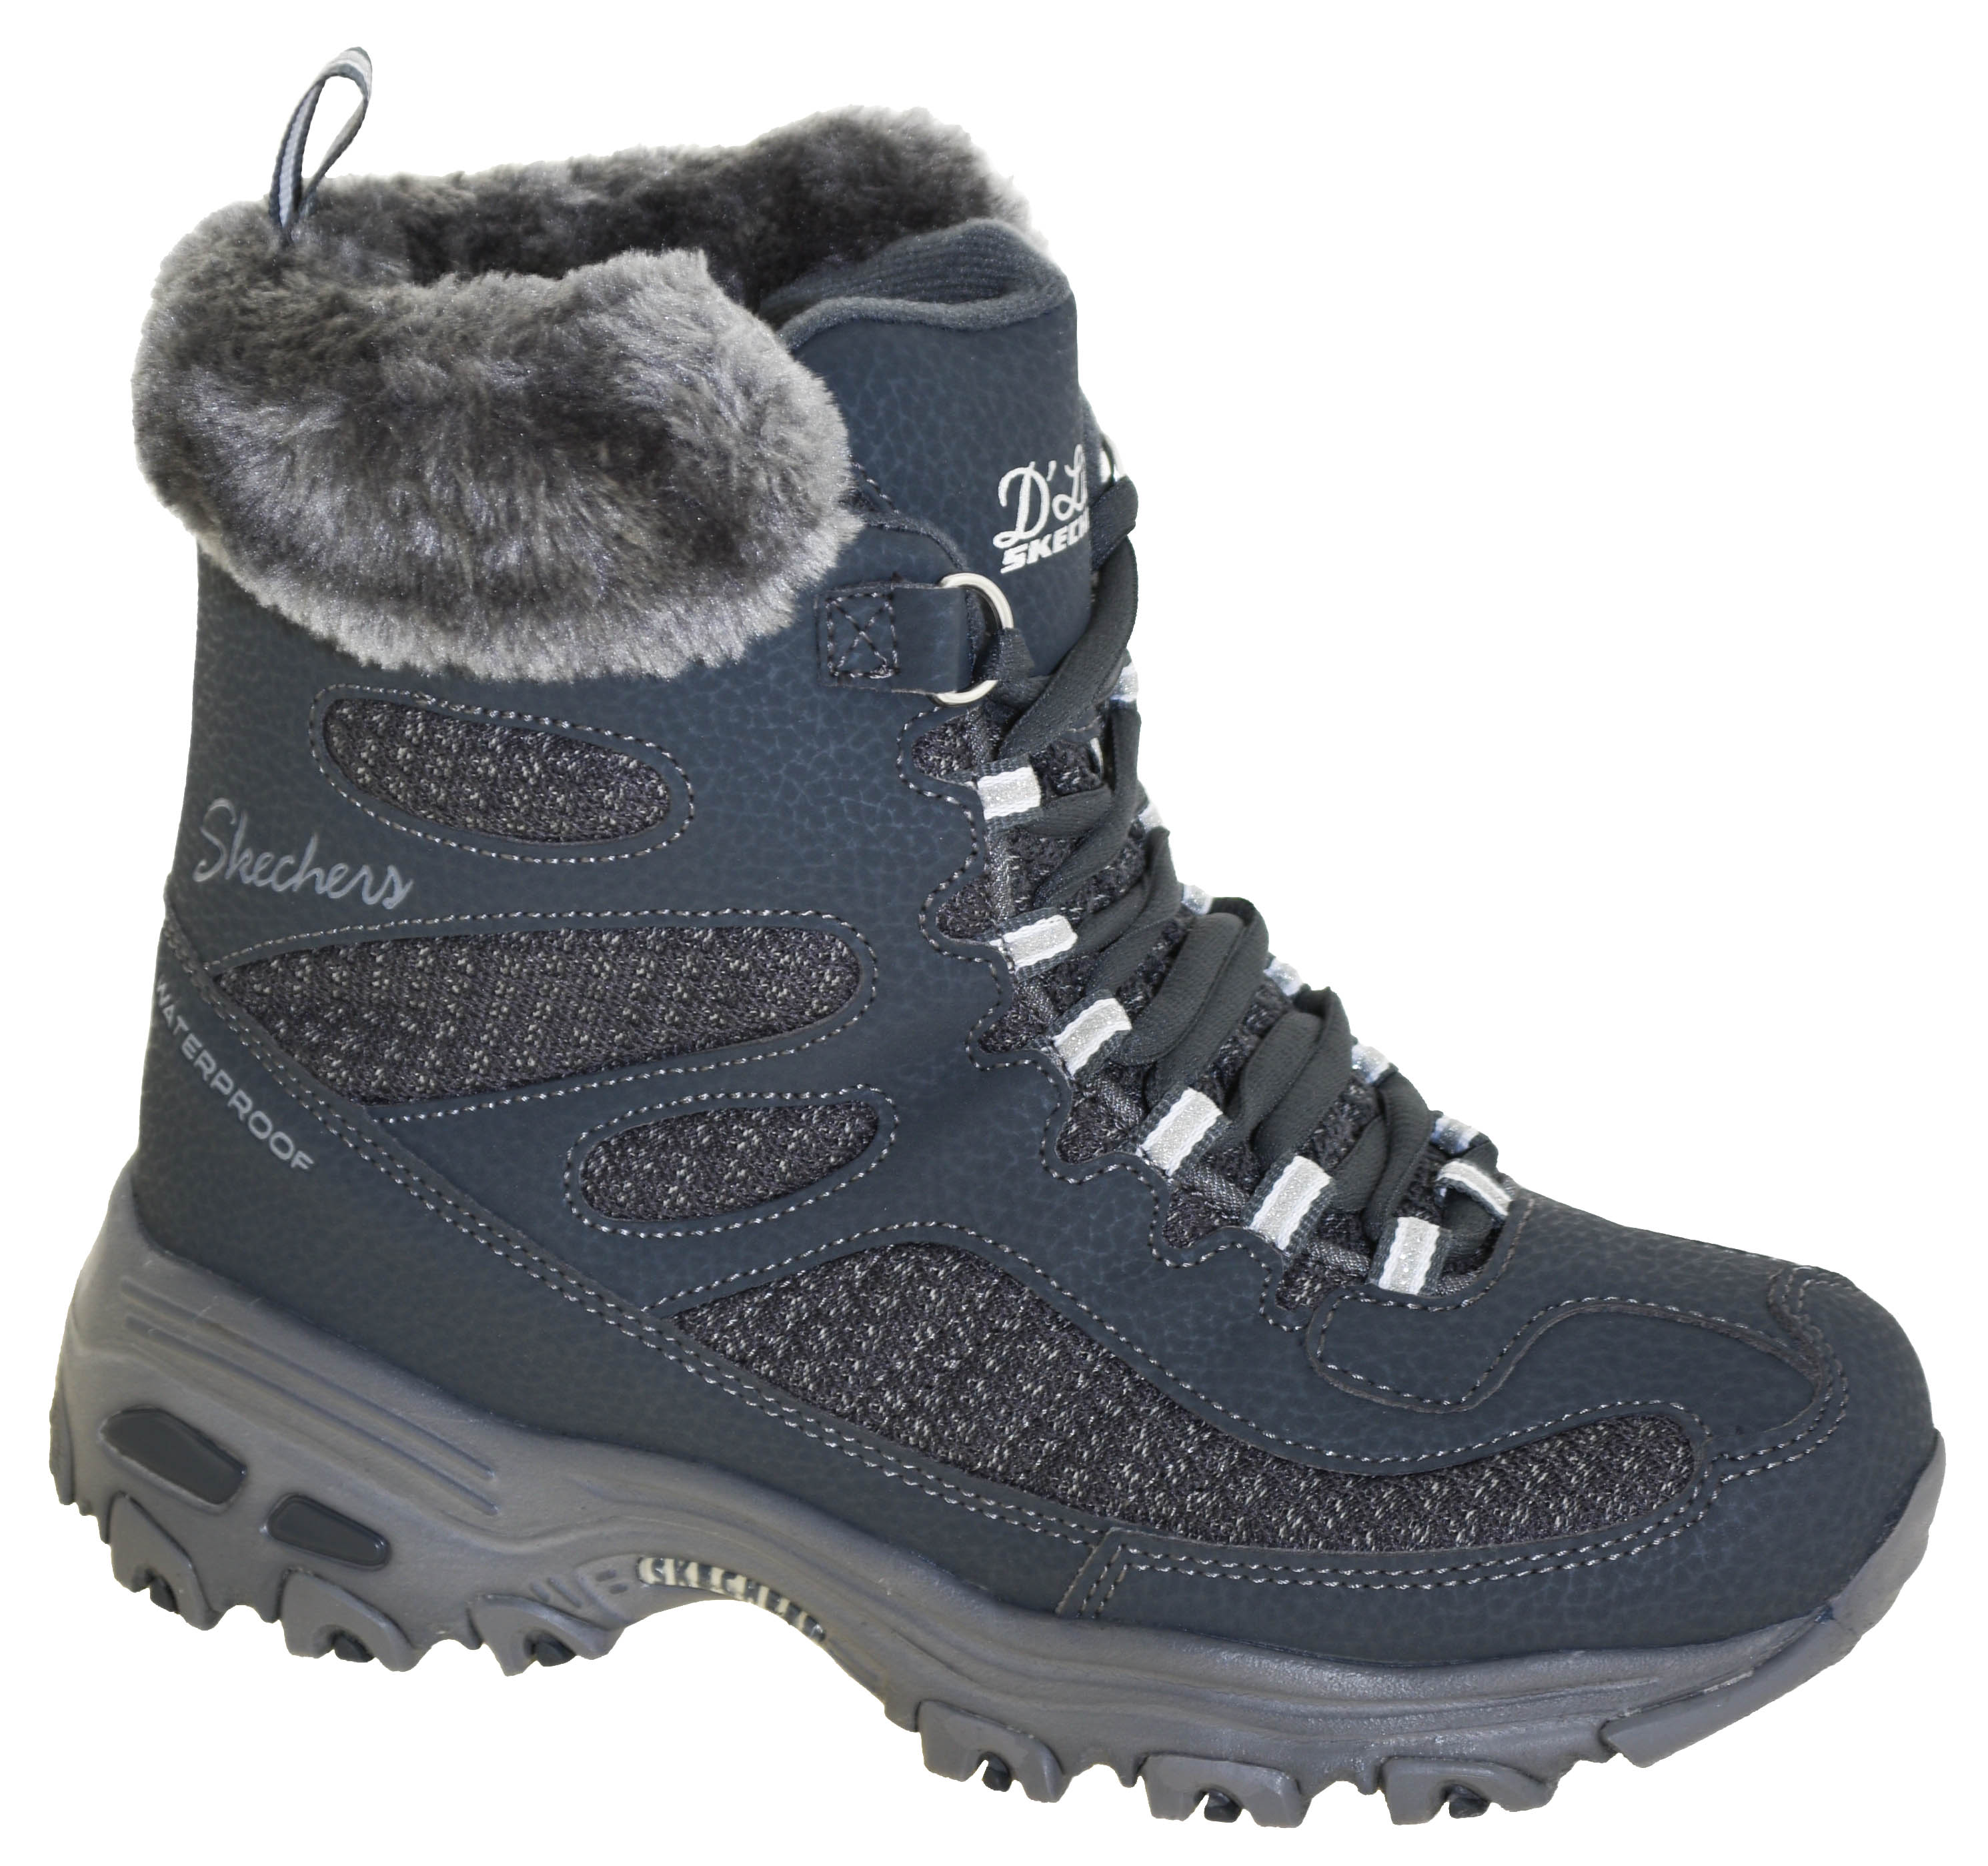 Skechers Women's D'Lites-Snow Plaza Winter Boots Style 48634 CCL | eBay